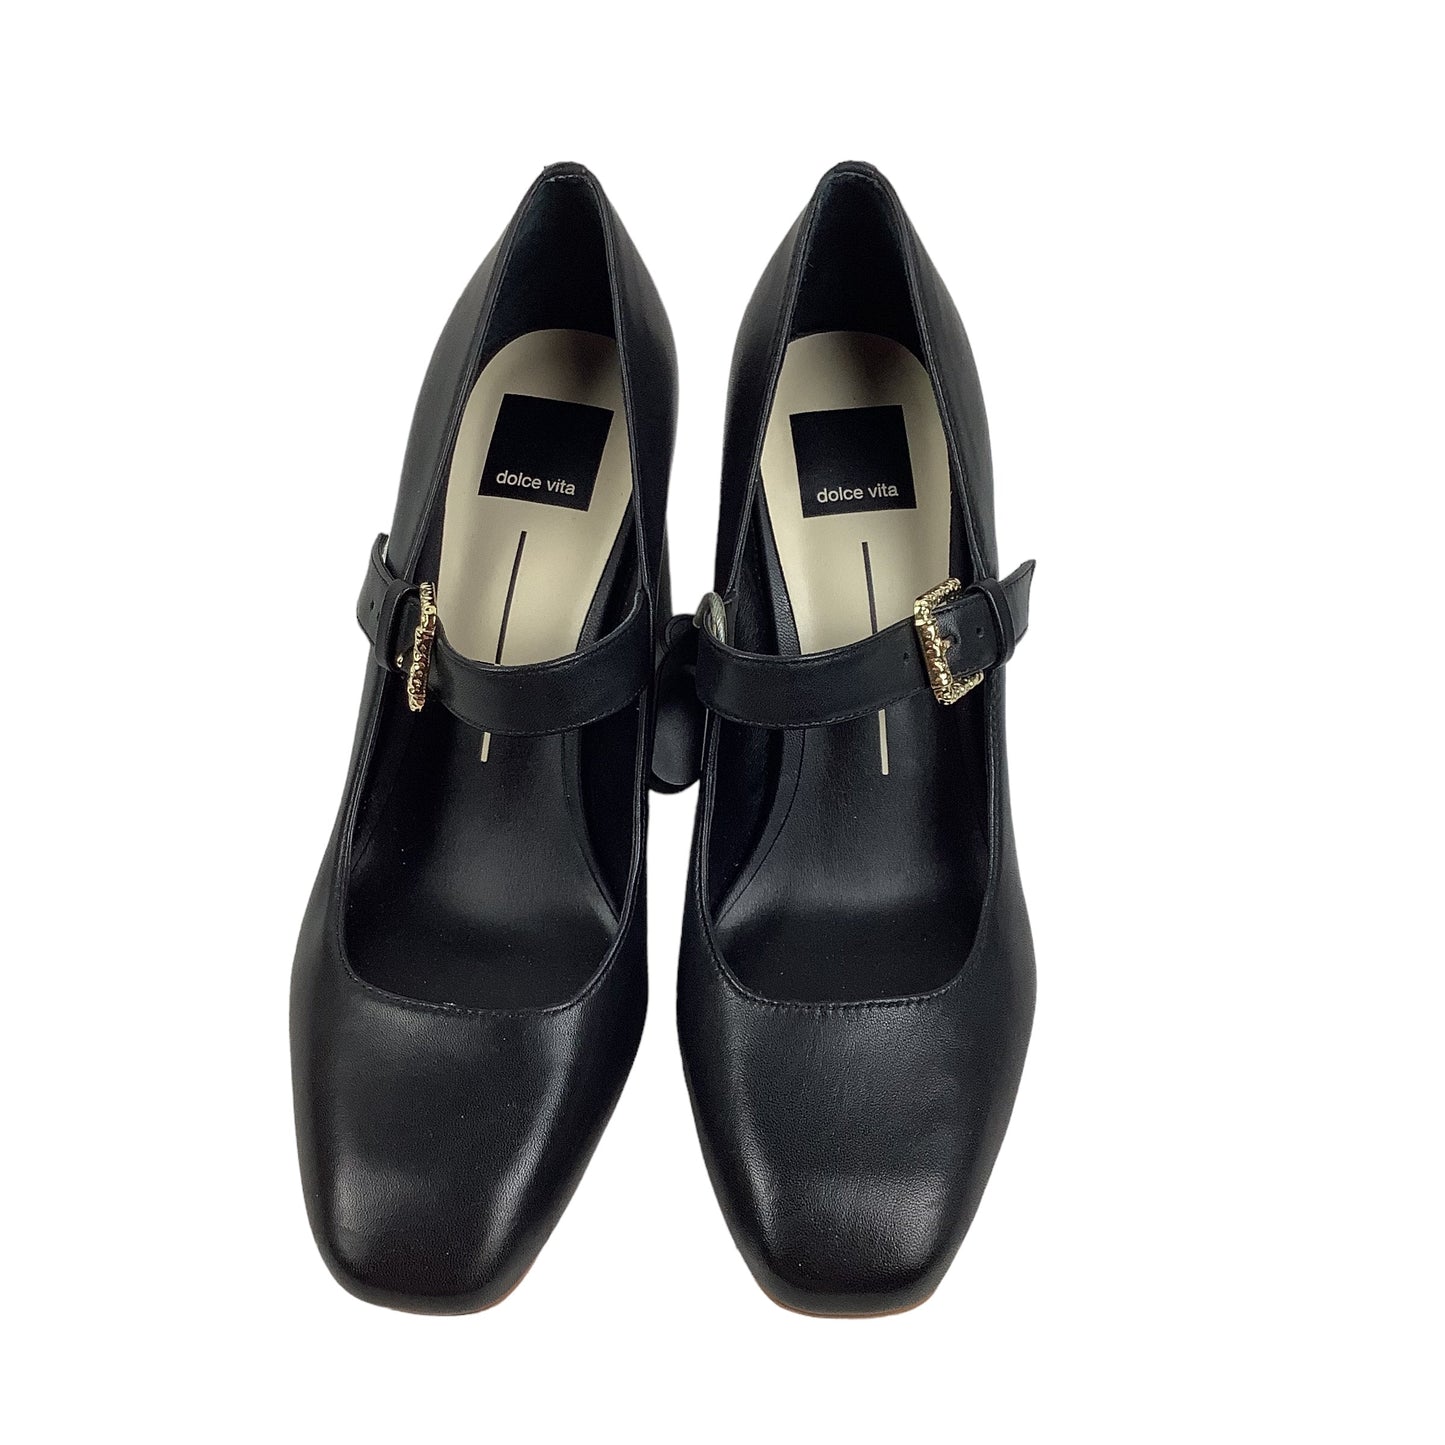 Black Shoes Heels Block Dolce Vita, Size 8.5